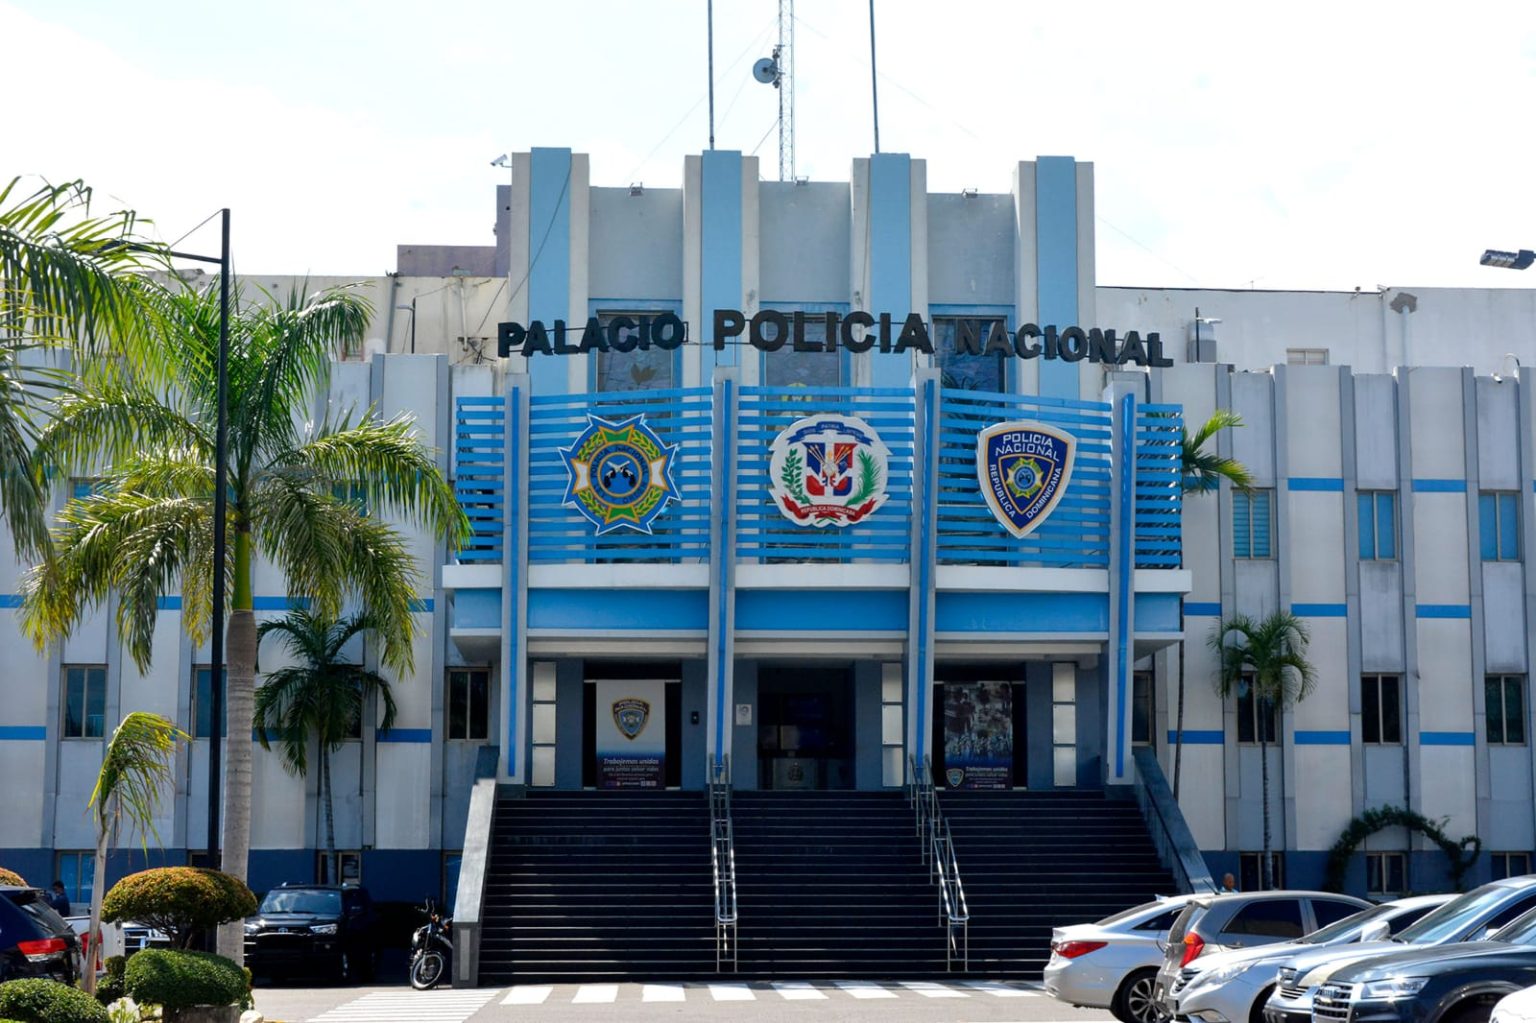 Policia nacional eljacaguero